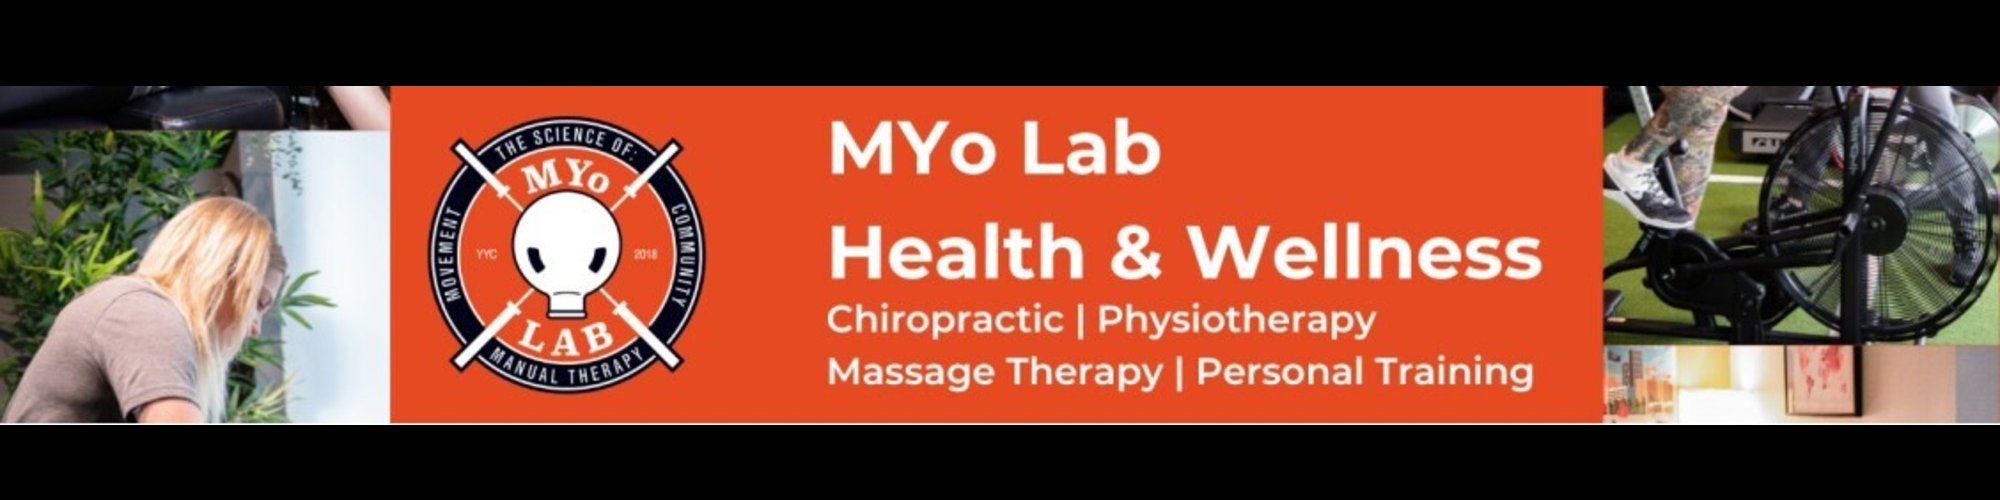 MYo Lab Health & Wellness